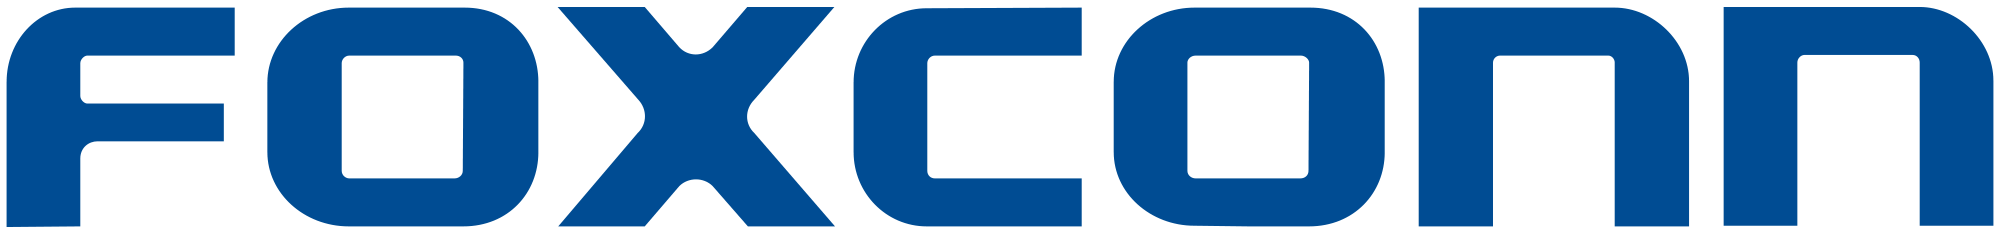 Foxconn Logo - Foxconn Logo.svg